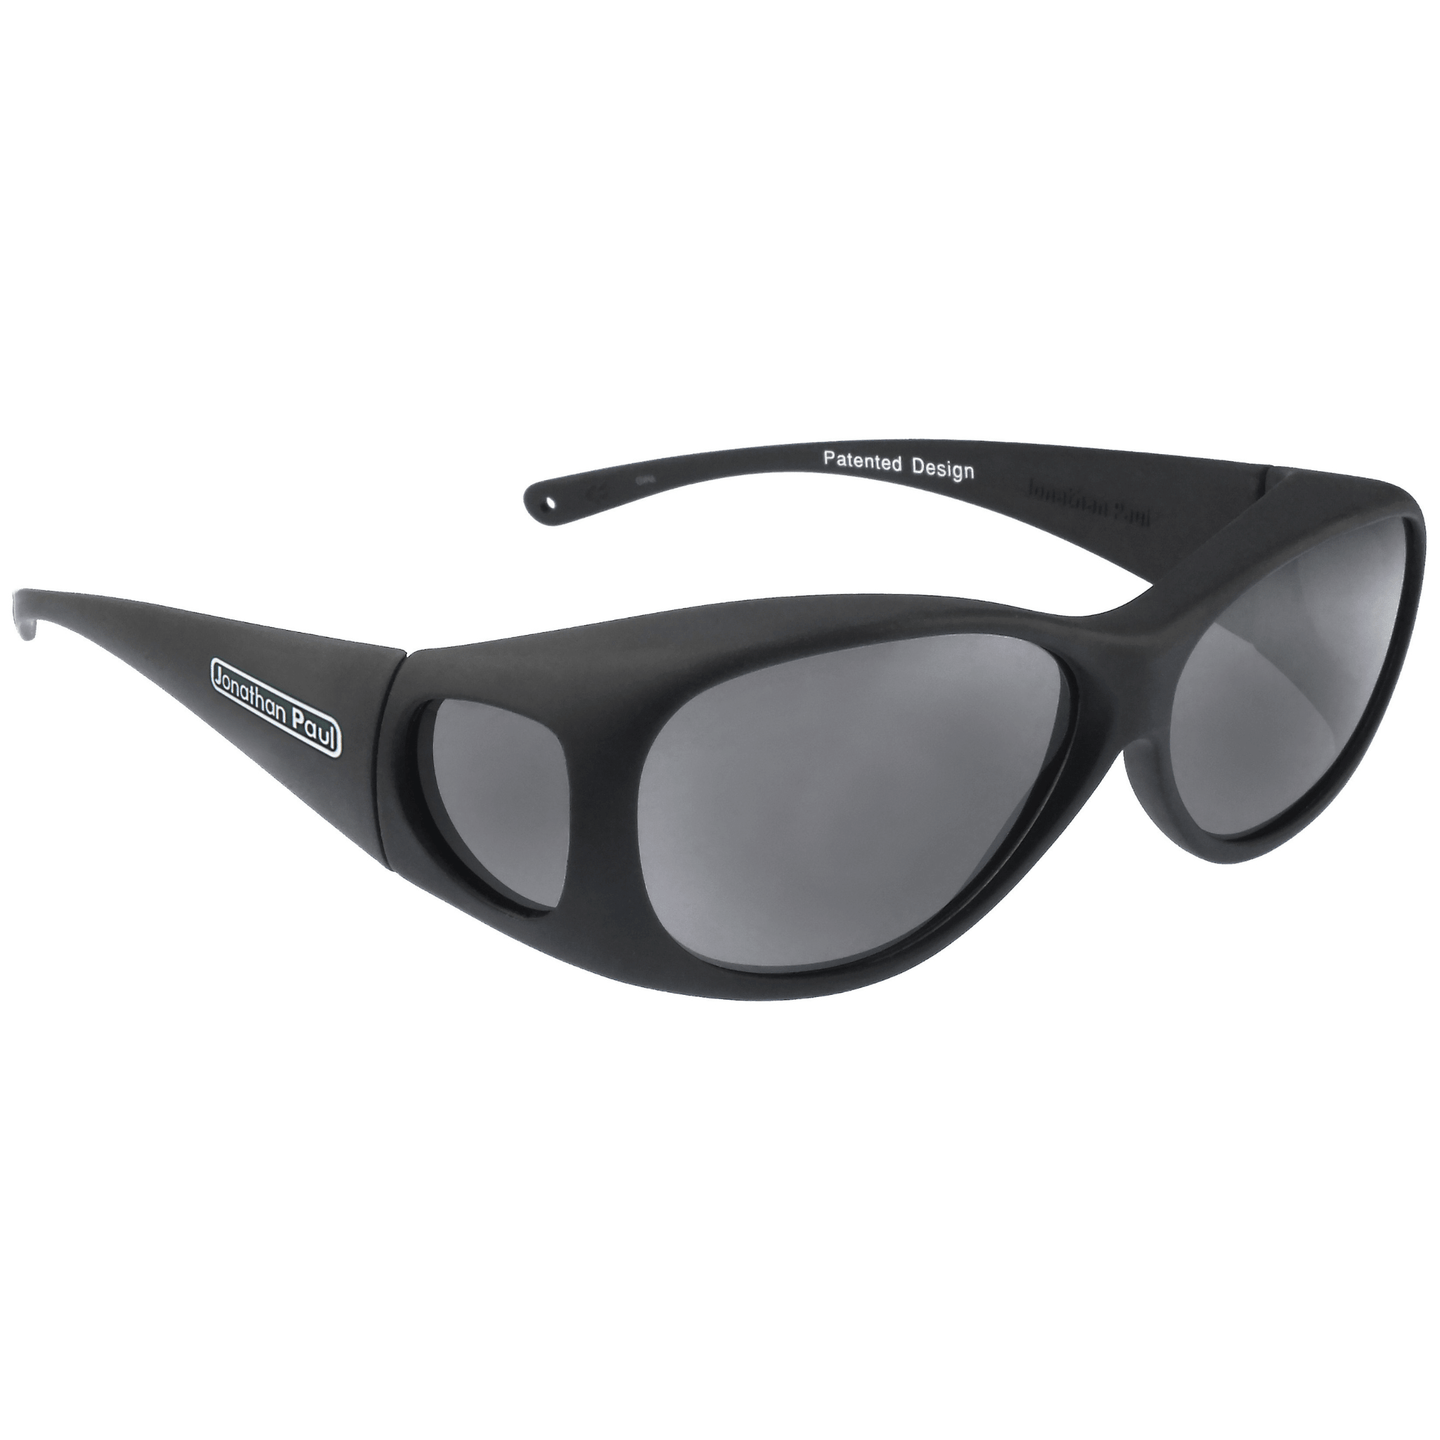 Fitover Sunglasses 'Lotus' Matte Black - Grey Lens